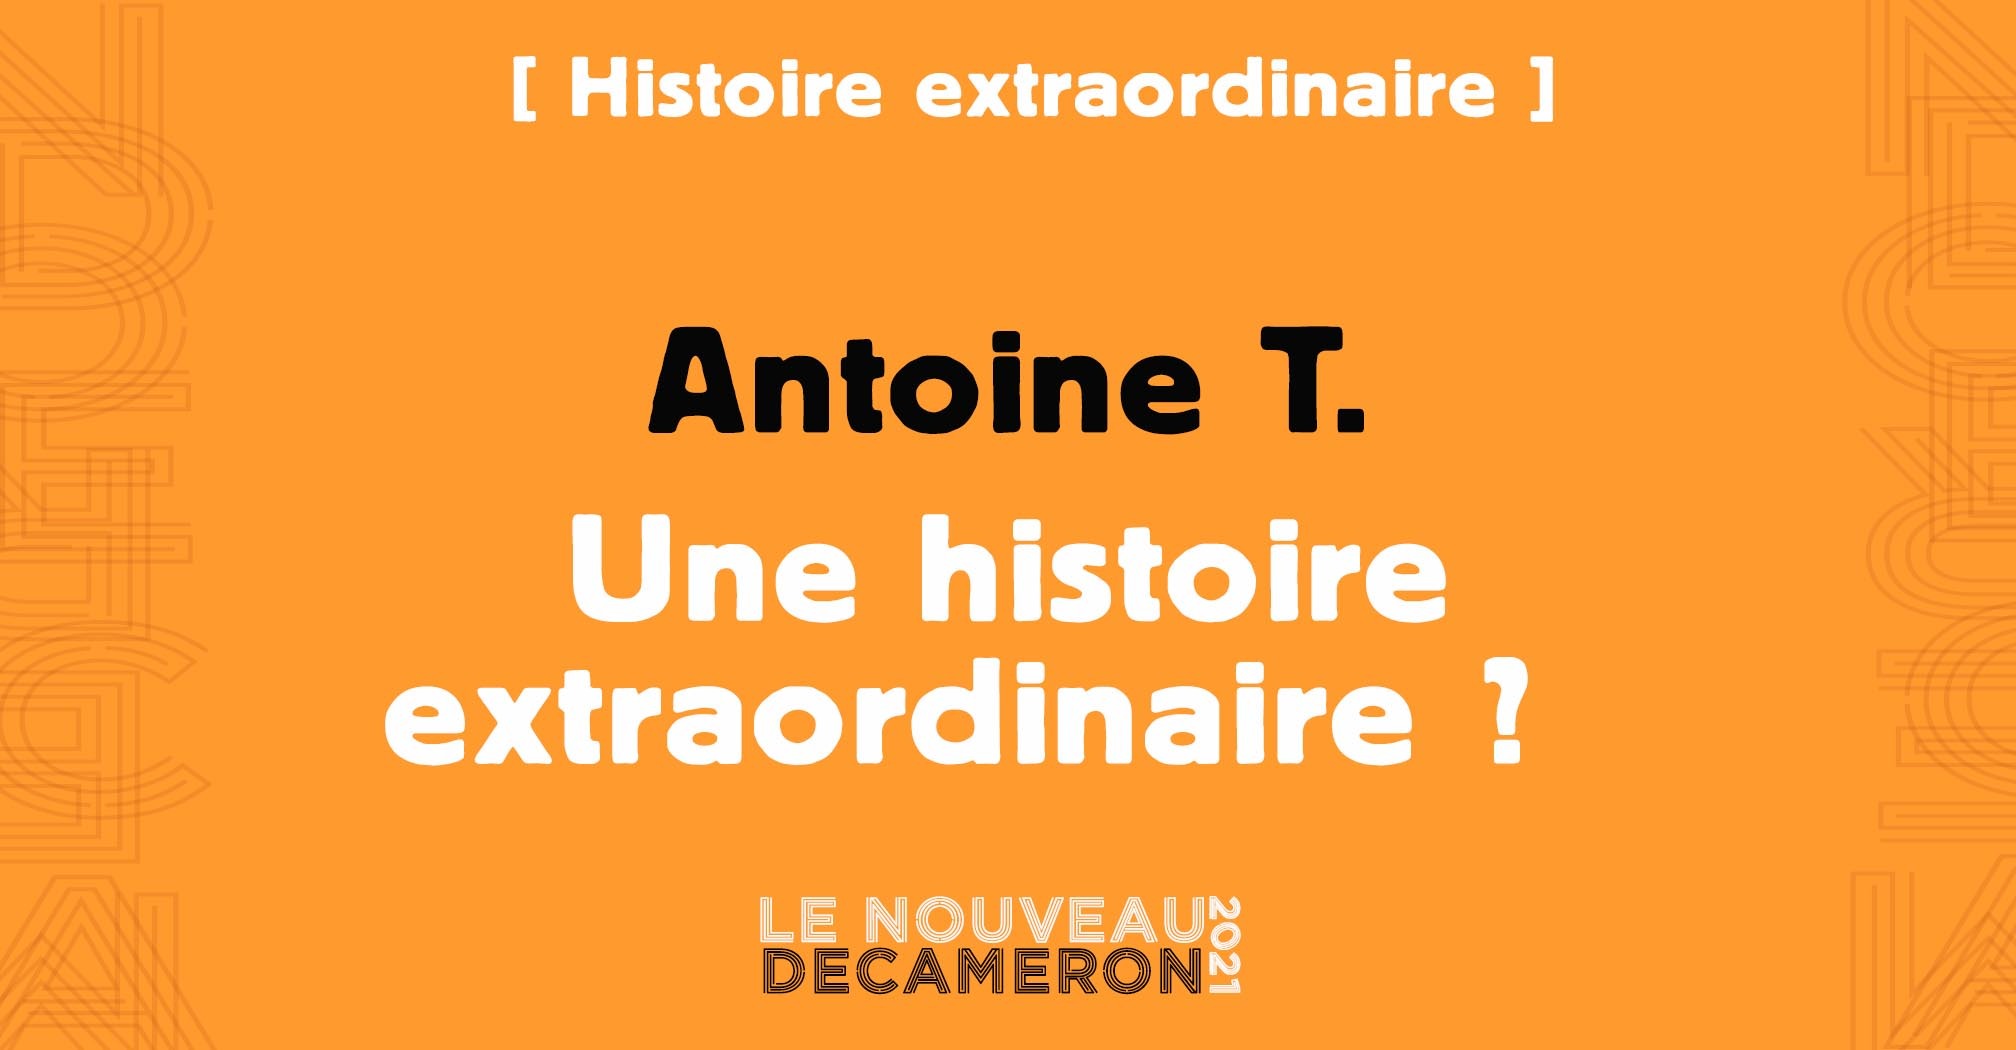 Antoine T. - Une histoire extraordinaire ?